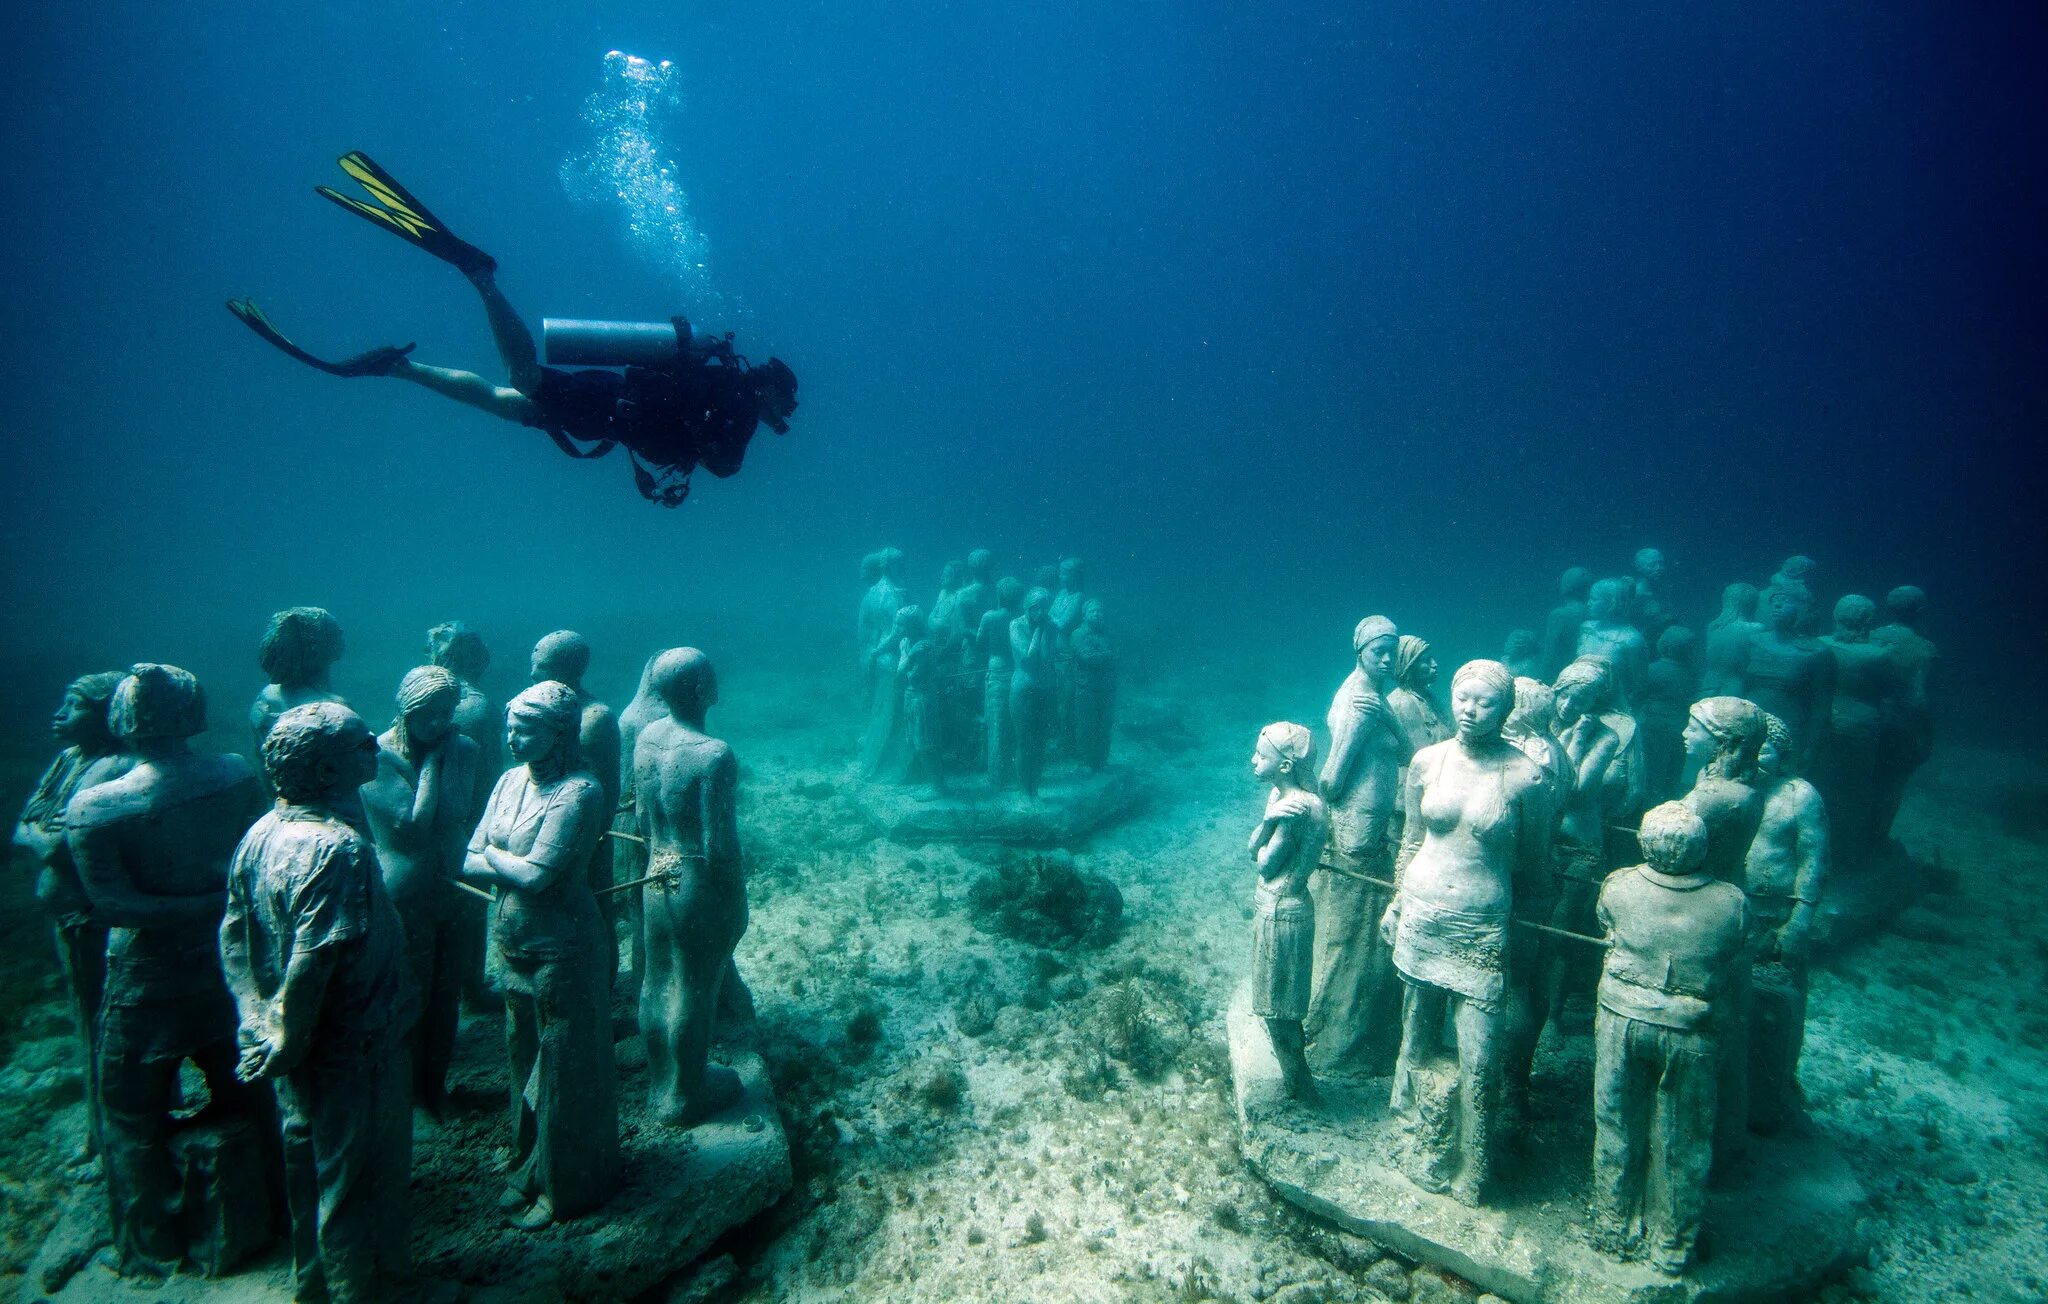 Тайны океана документальные. Канкун Мексика подводный музей. Канкун музей подводных скульптур. Подводный музей скульптур в Канкуне. Музей подводных скульптур Мексика.